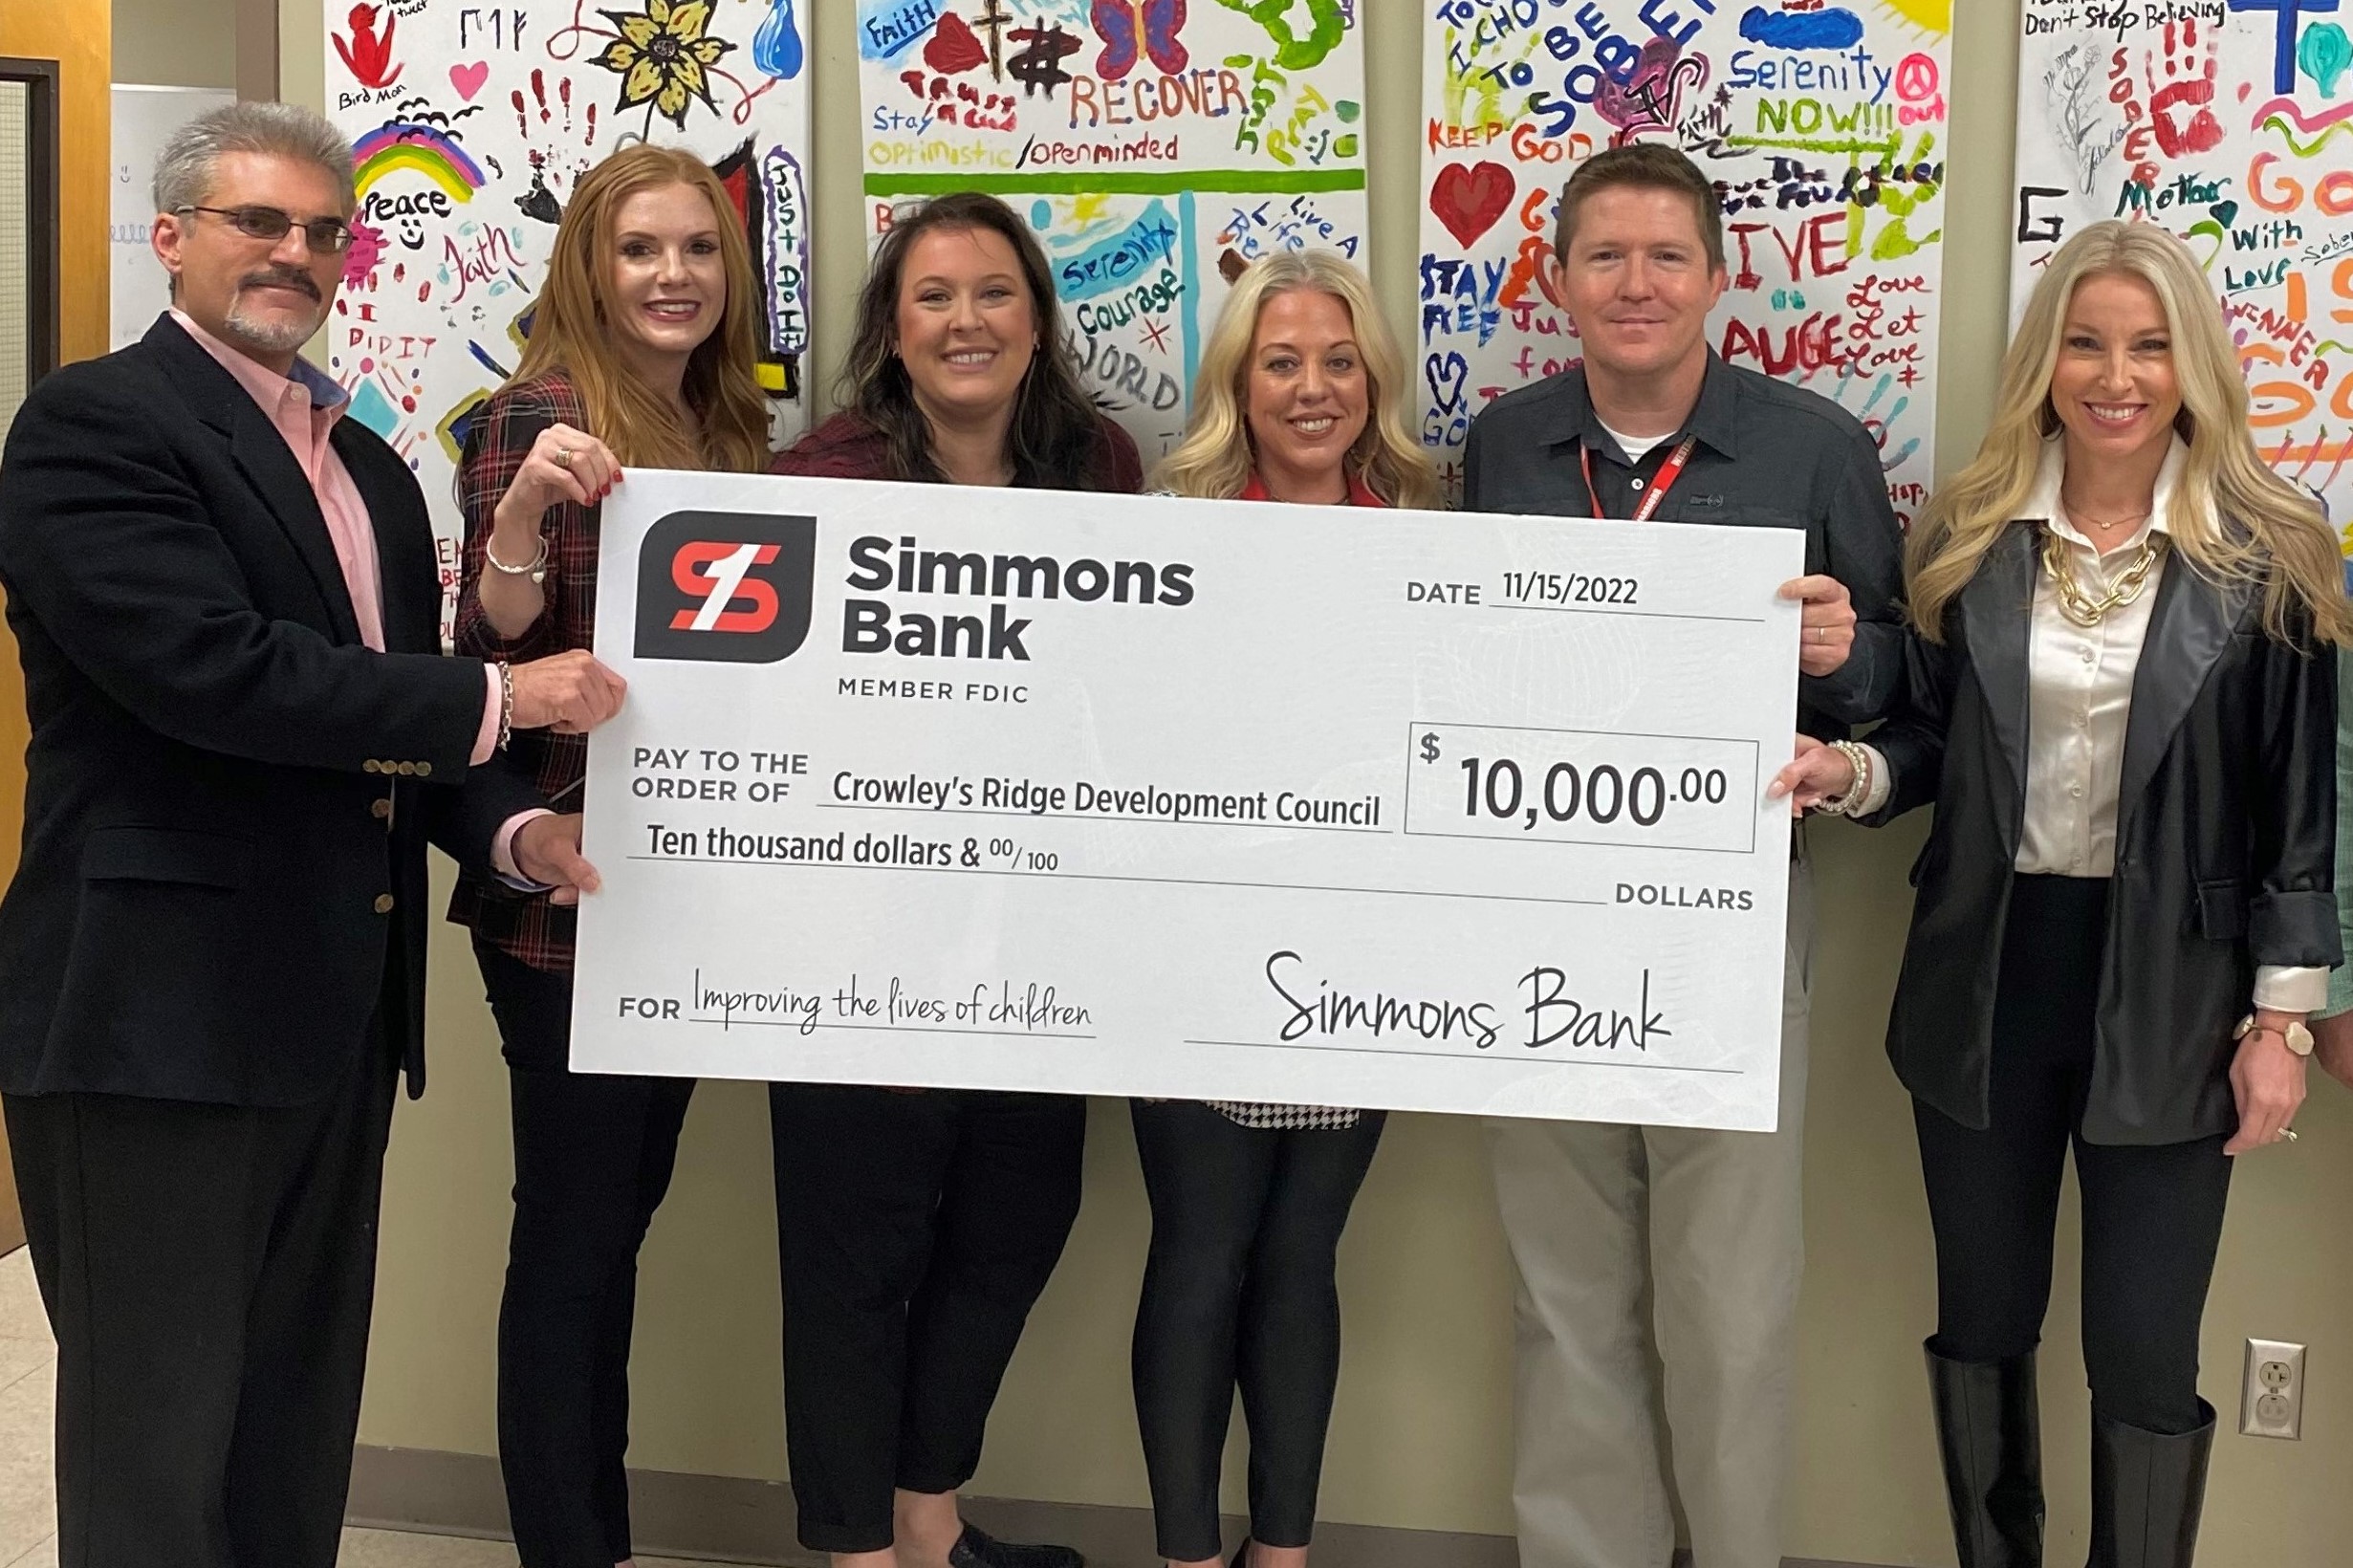 Simmons Bank in Jonesboro Donates $10,000 to Crowley’s Ridge Development Council